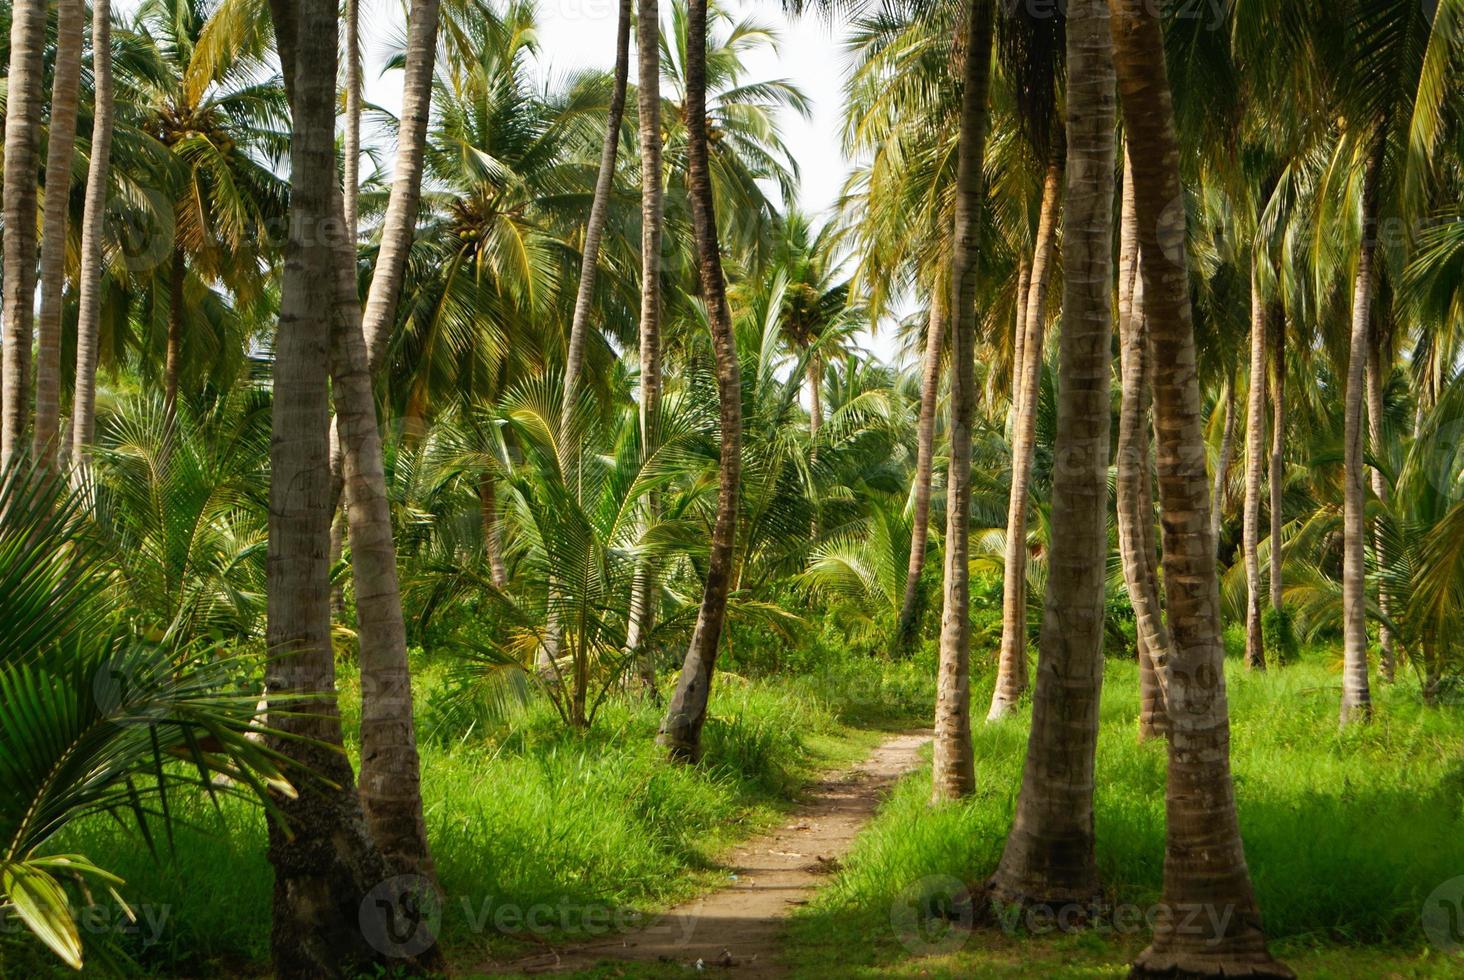 floresta de palmeiras verdes na mucura da ilha colombiana foto